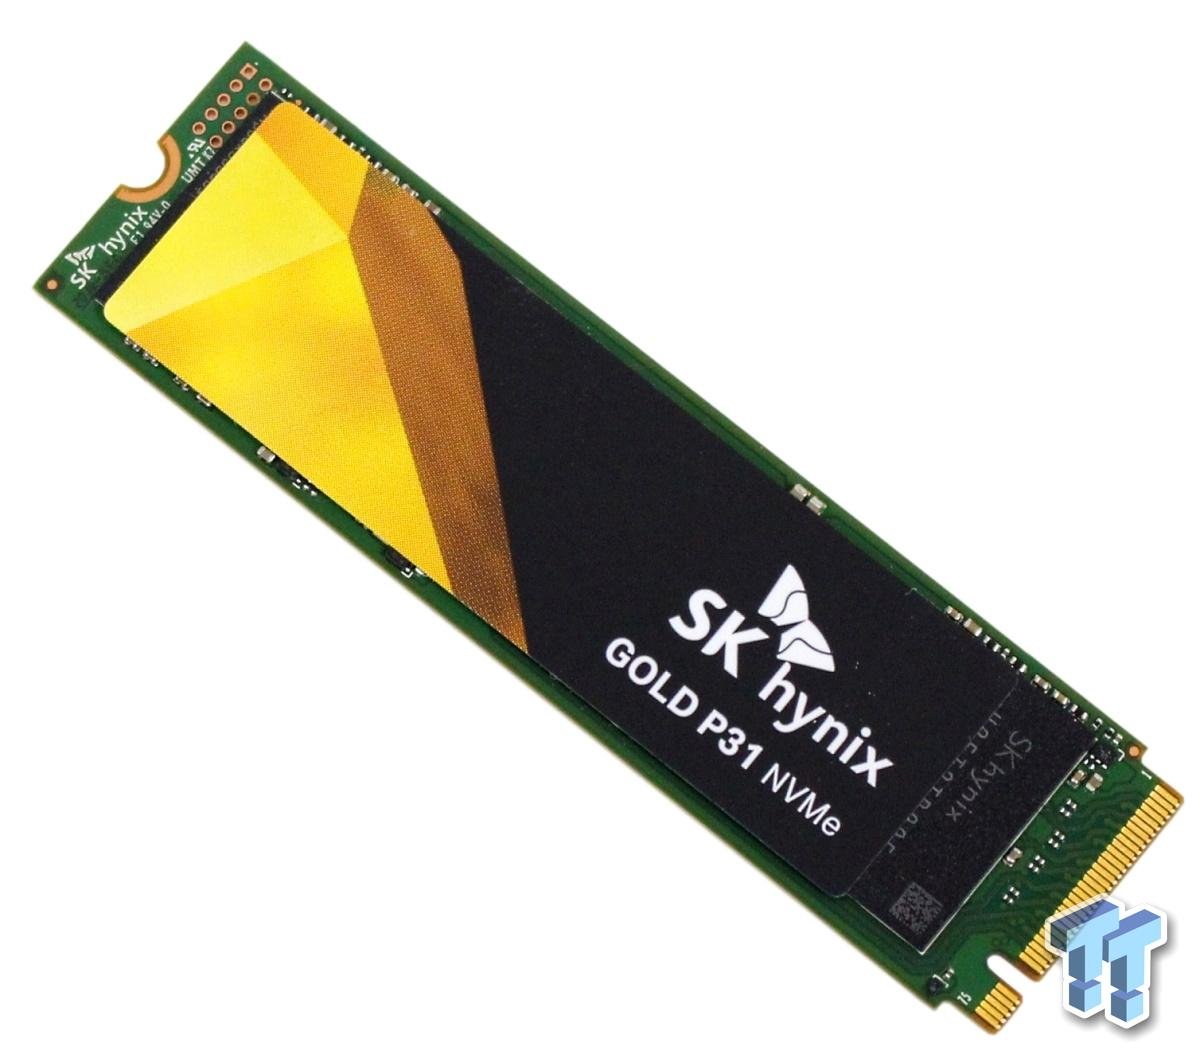 Dialecto Leopardo lino SK hynix Gold P31 1TB NVMe M.2 SSD Review | TweakTown